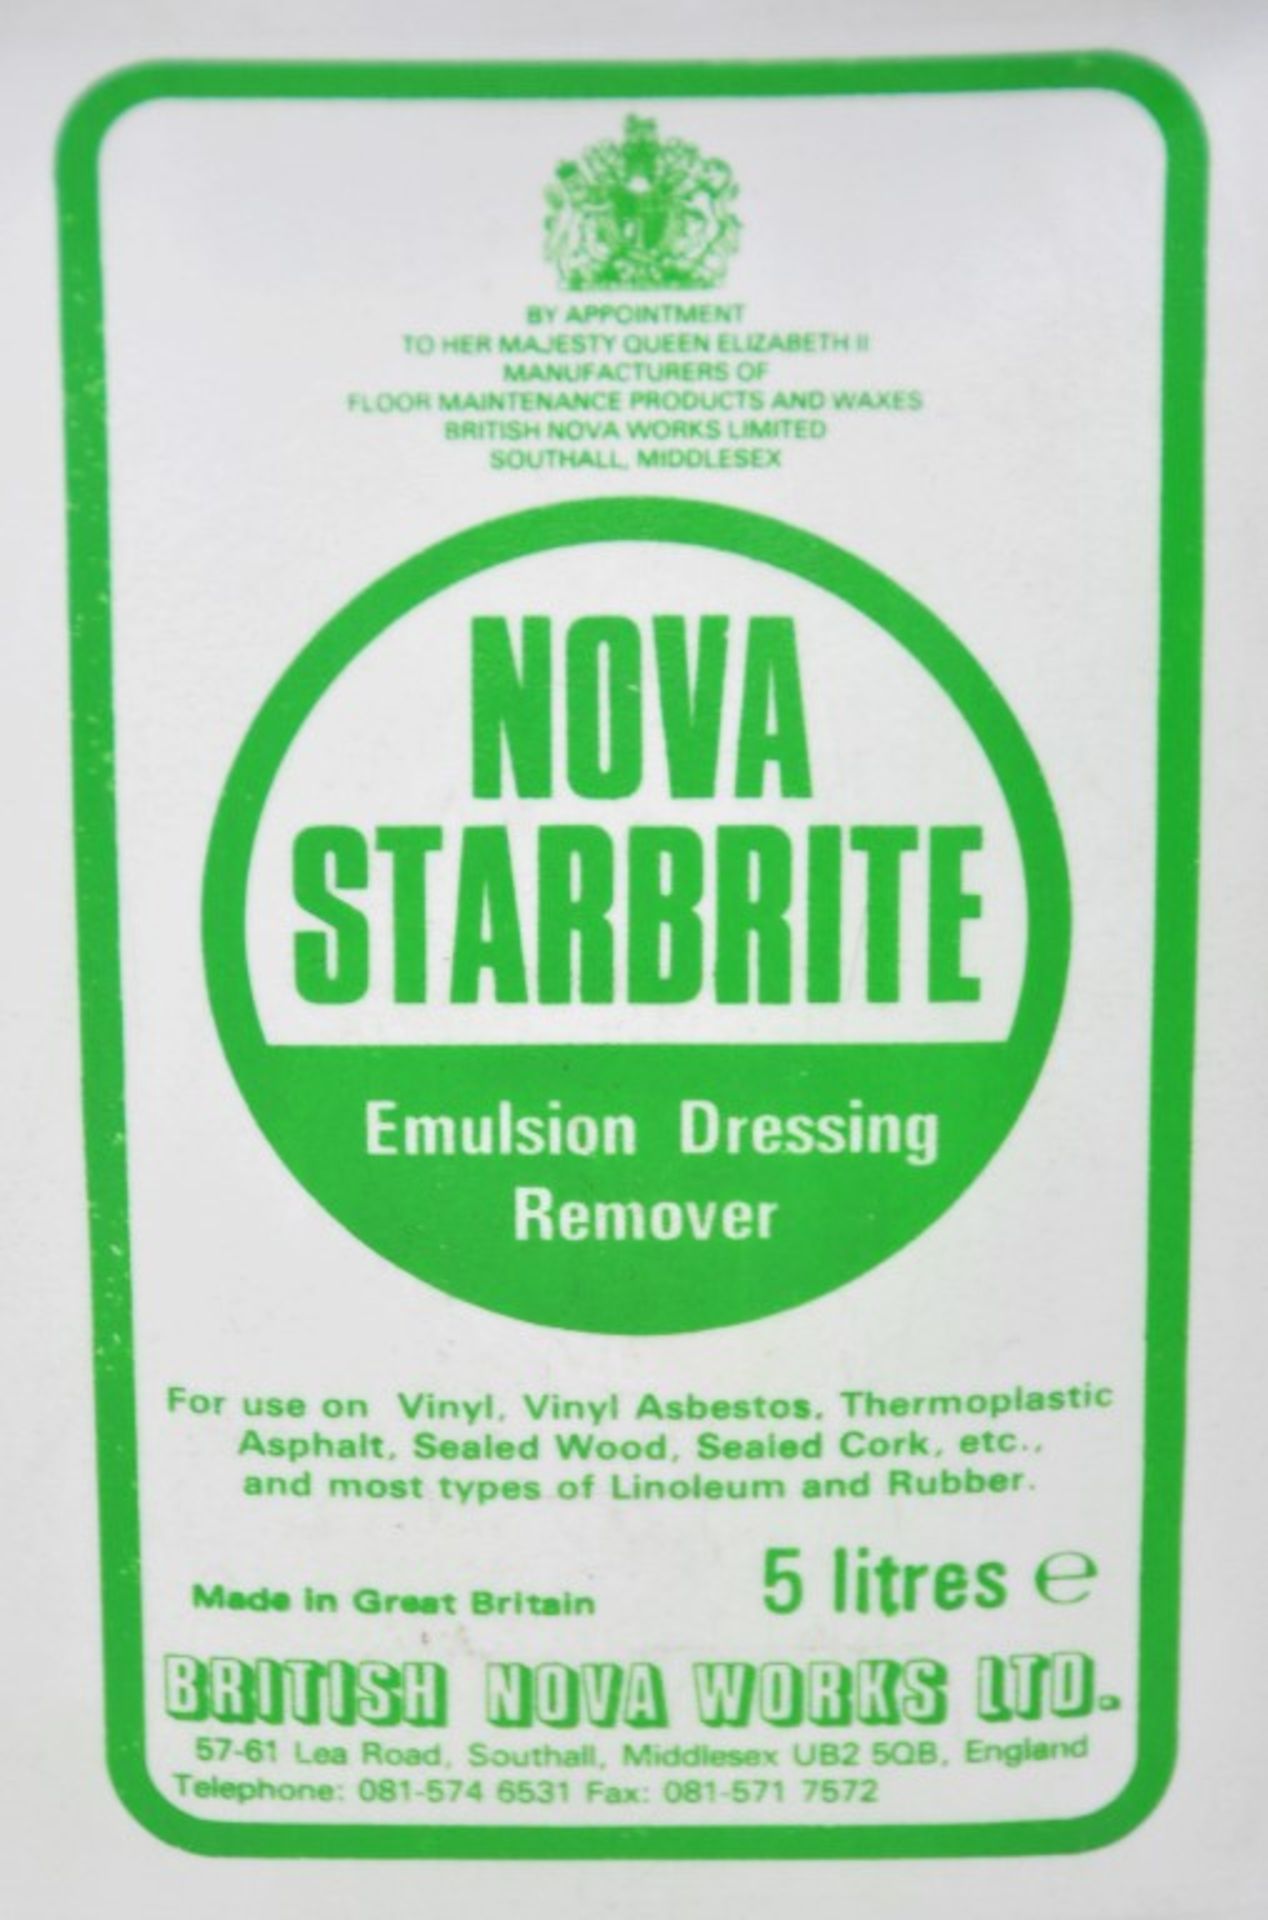 3 x Nova Starbright EMULSION DRESSING REMOVER - 5 Litres Tubs - Unused Stock - CL107 - Ref - Image 2 of 2